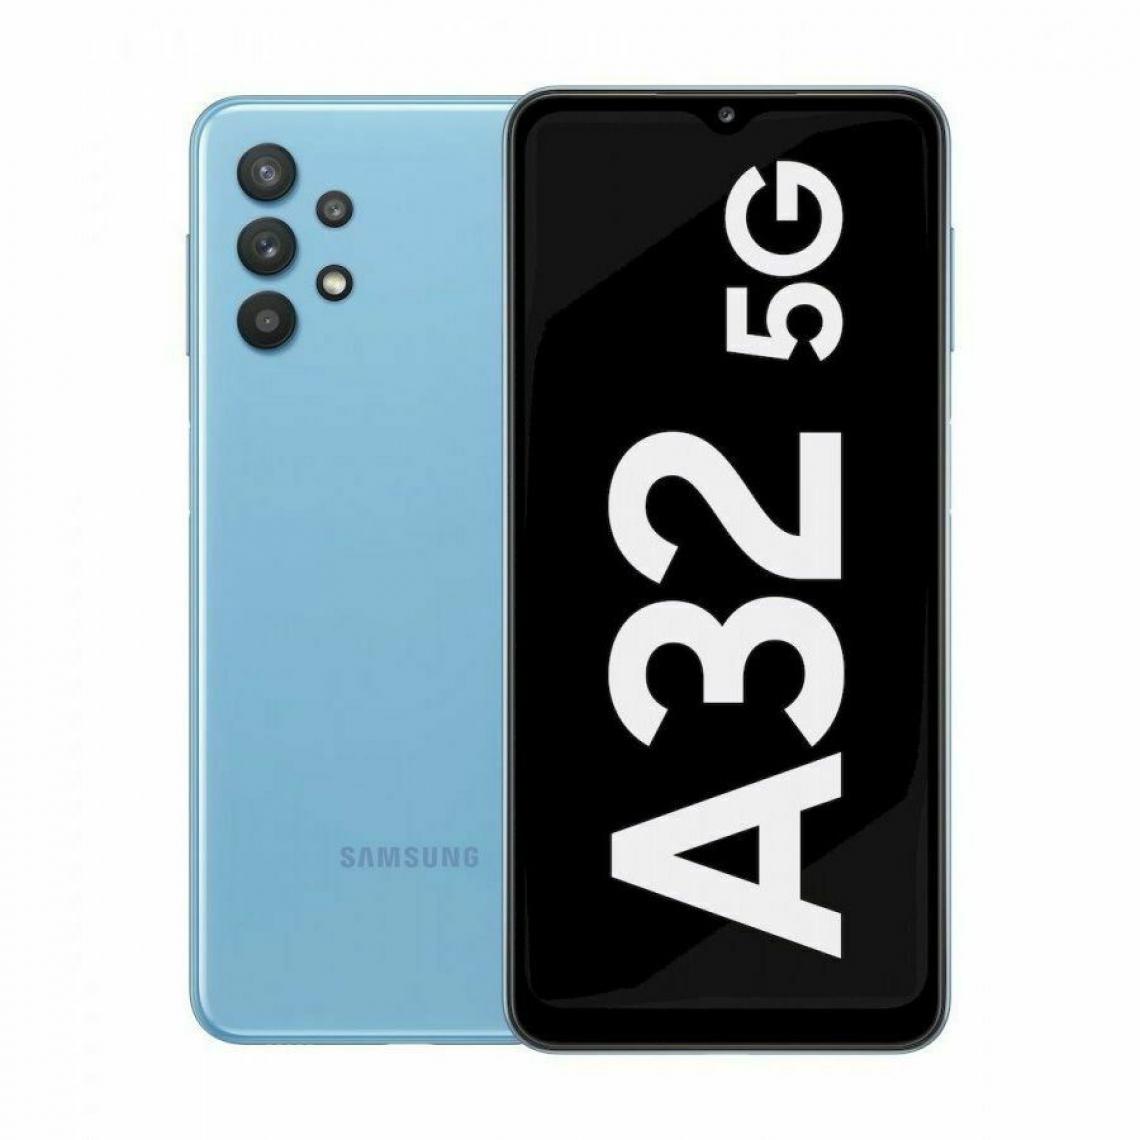 Samsung - Smartphone SAMSUNG GALAXY A32 4G Bleu - Smartphone Android